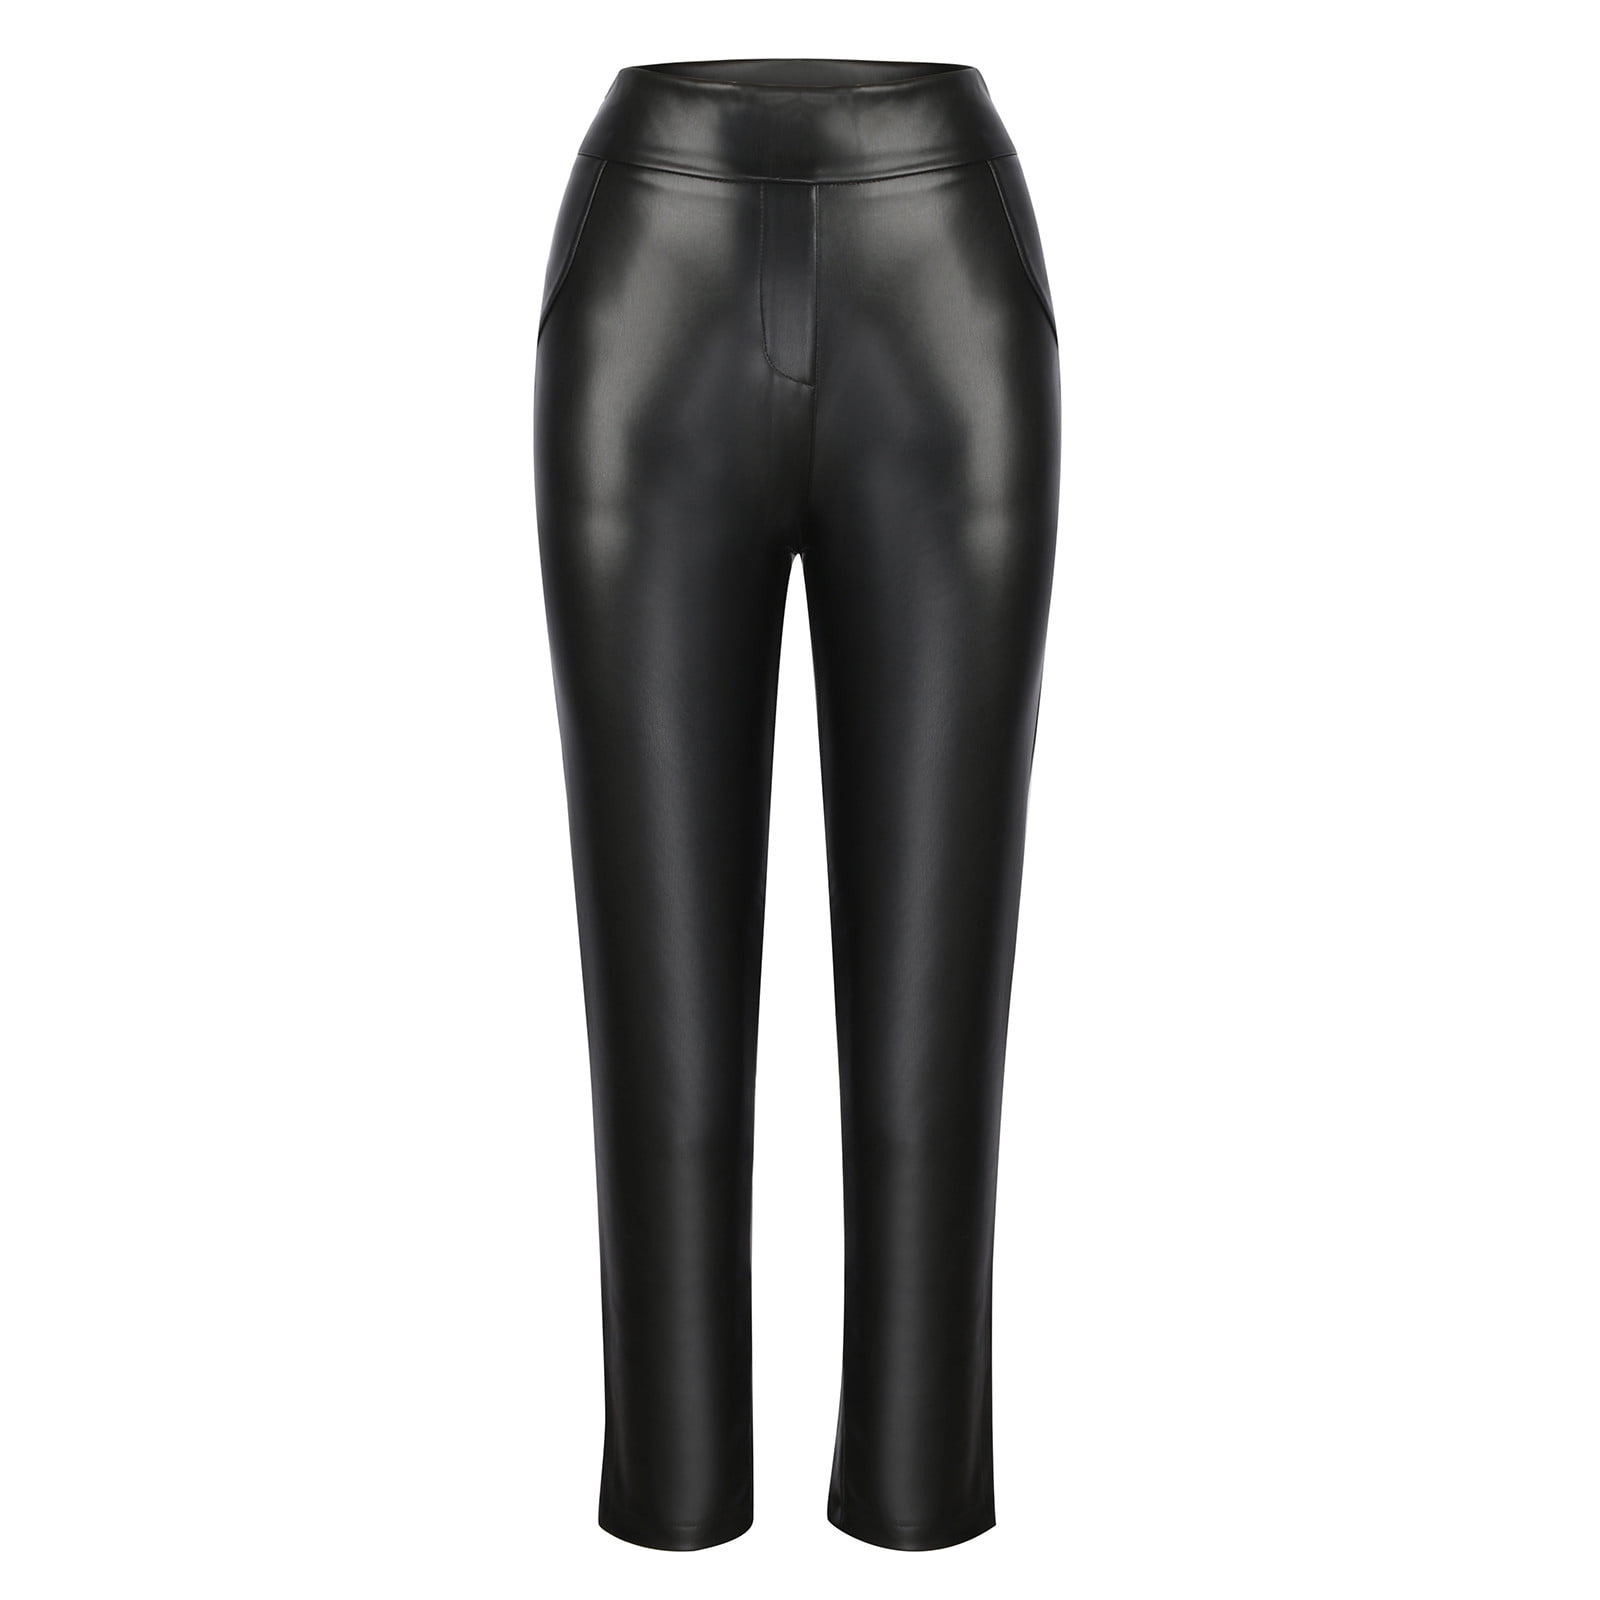 Buy Women Black Regular Fit Solid Casual Trousers Online - 739089